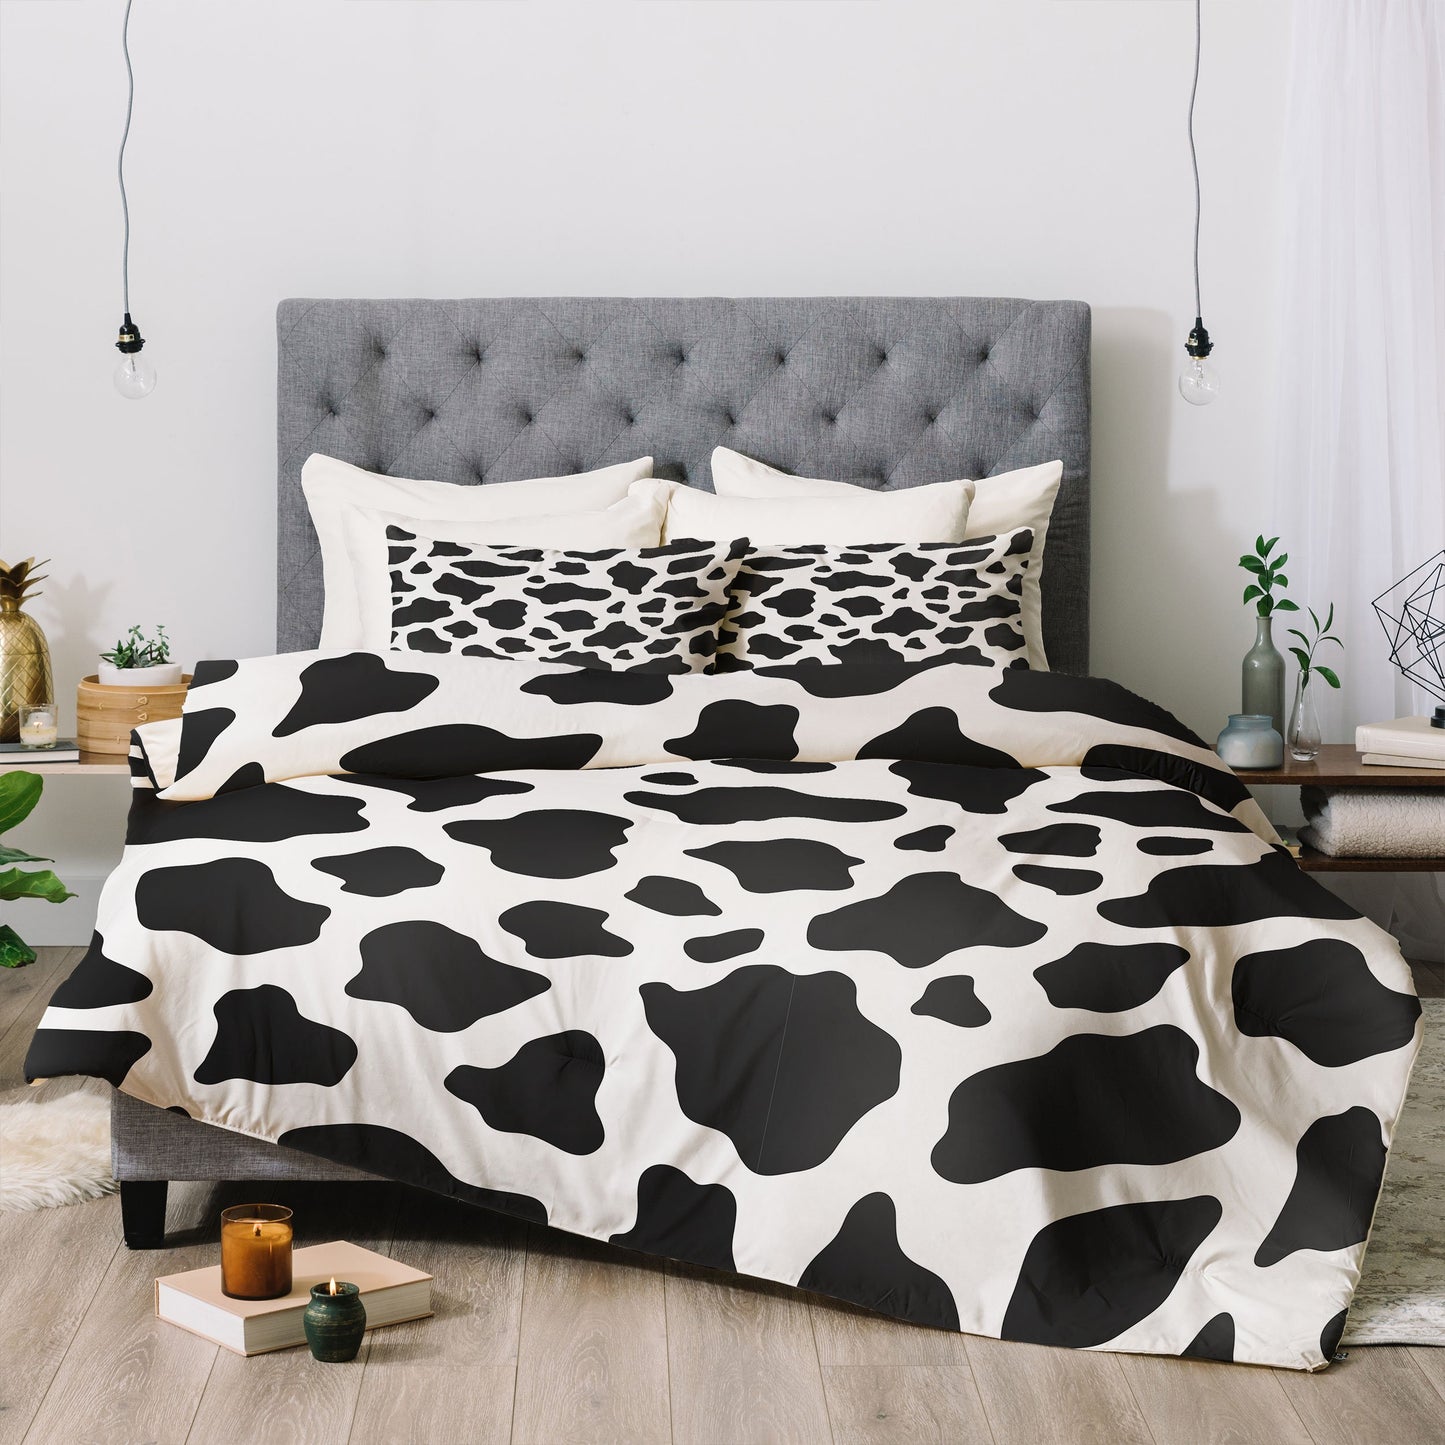 Cow Print Comforter - bedding, blanket, comforter, comforters, cow, cow comforter, cow print, cow prints, cow prnit, cowfarm, cowgirl, Cowprint, cows, cowws, cute cows, decor, farm, home, home decor, homedecor, ranch, southwest, southwestern, western, western home decor, westerndecor, westernhomedecor -  - Baha Ranch Western Wear